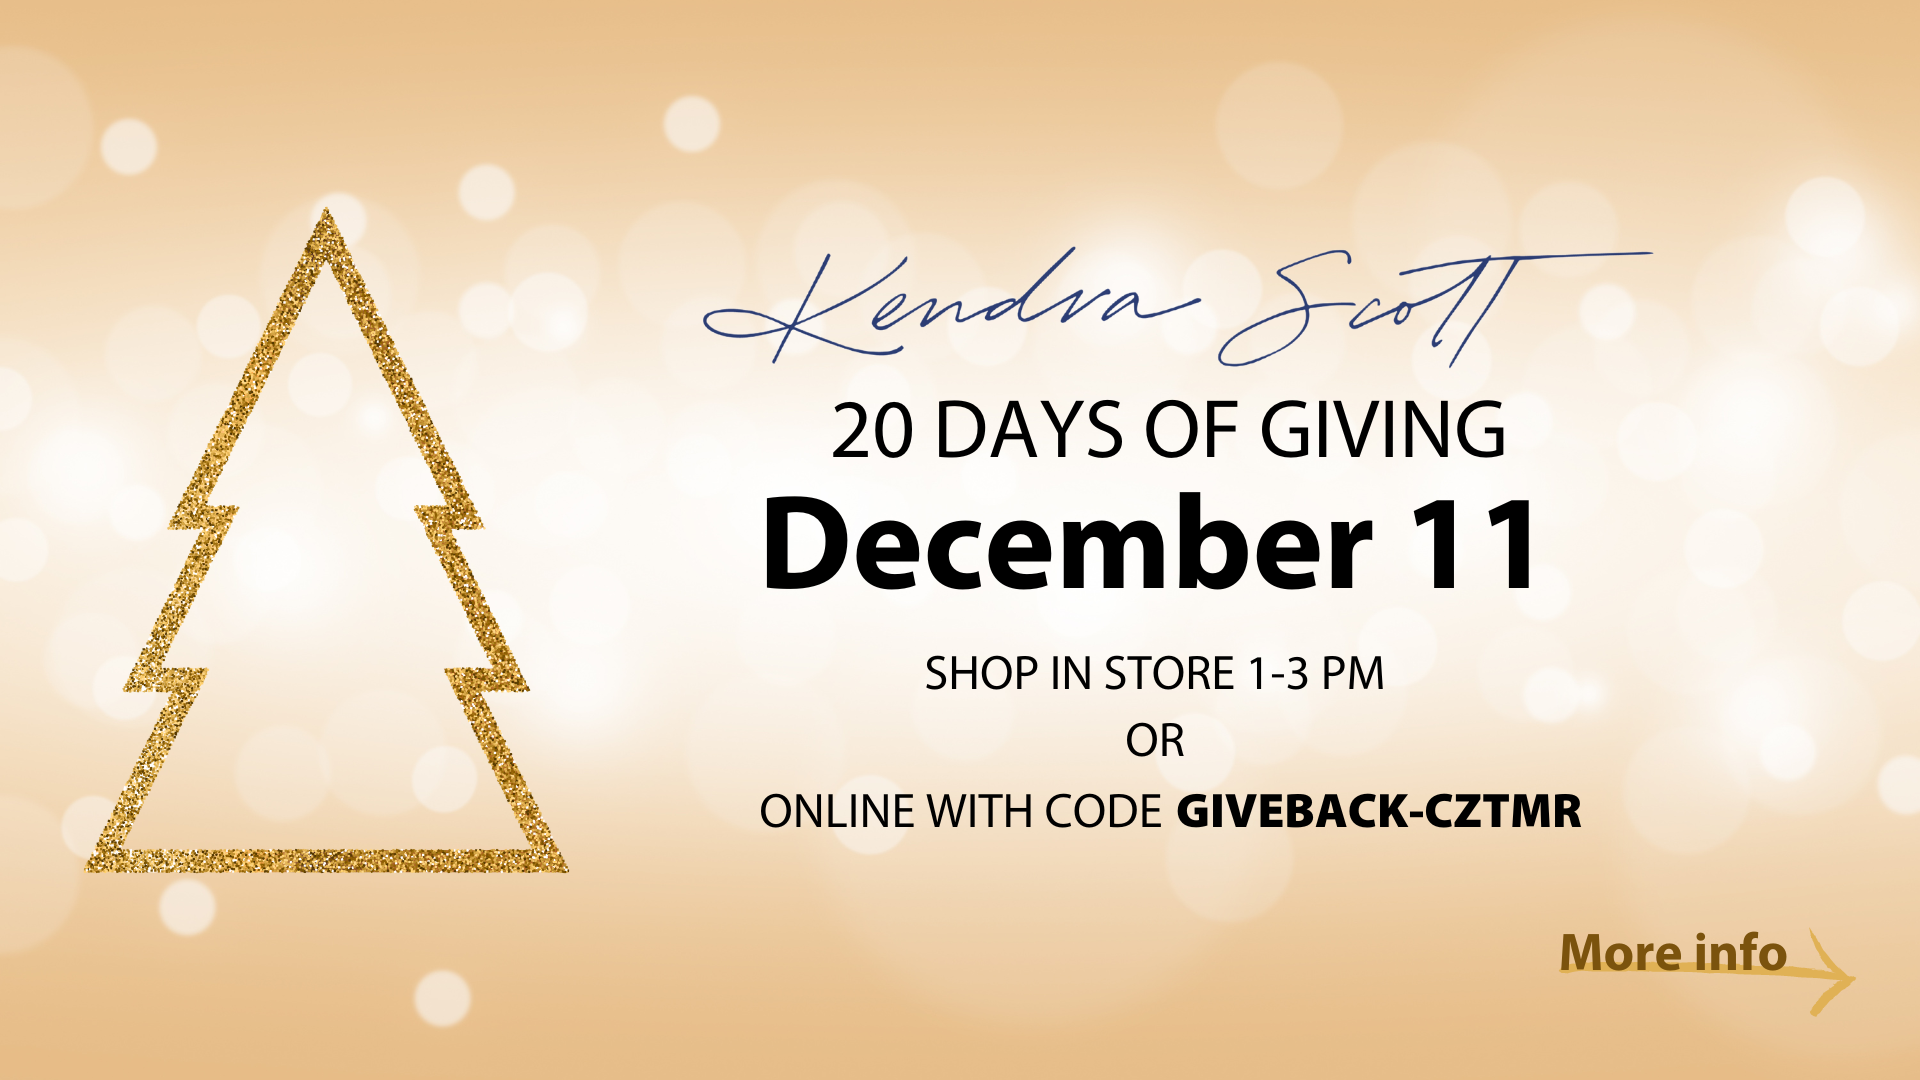 Kendra Scott 20 Days of Giving Fundraiser - ROCK